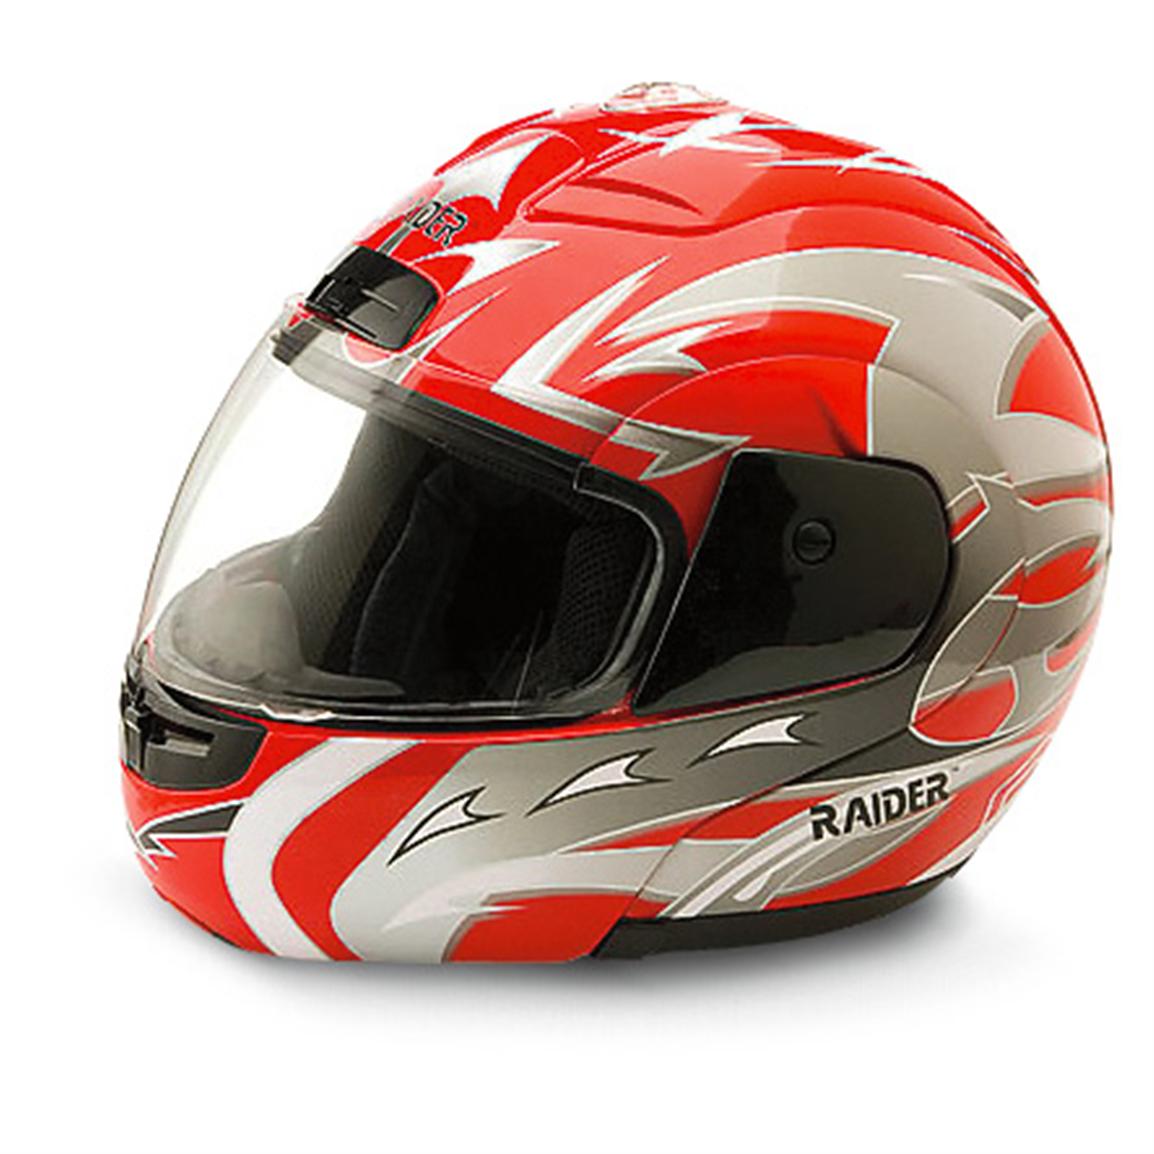 Raider™ Modular Motorcycle Helmet - 140014, Helmets & Goggles at